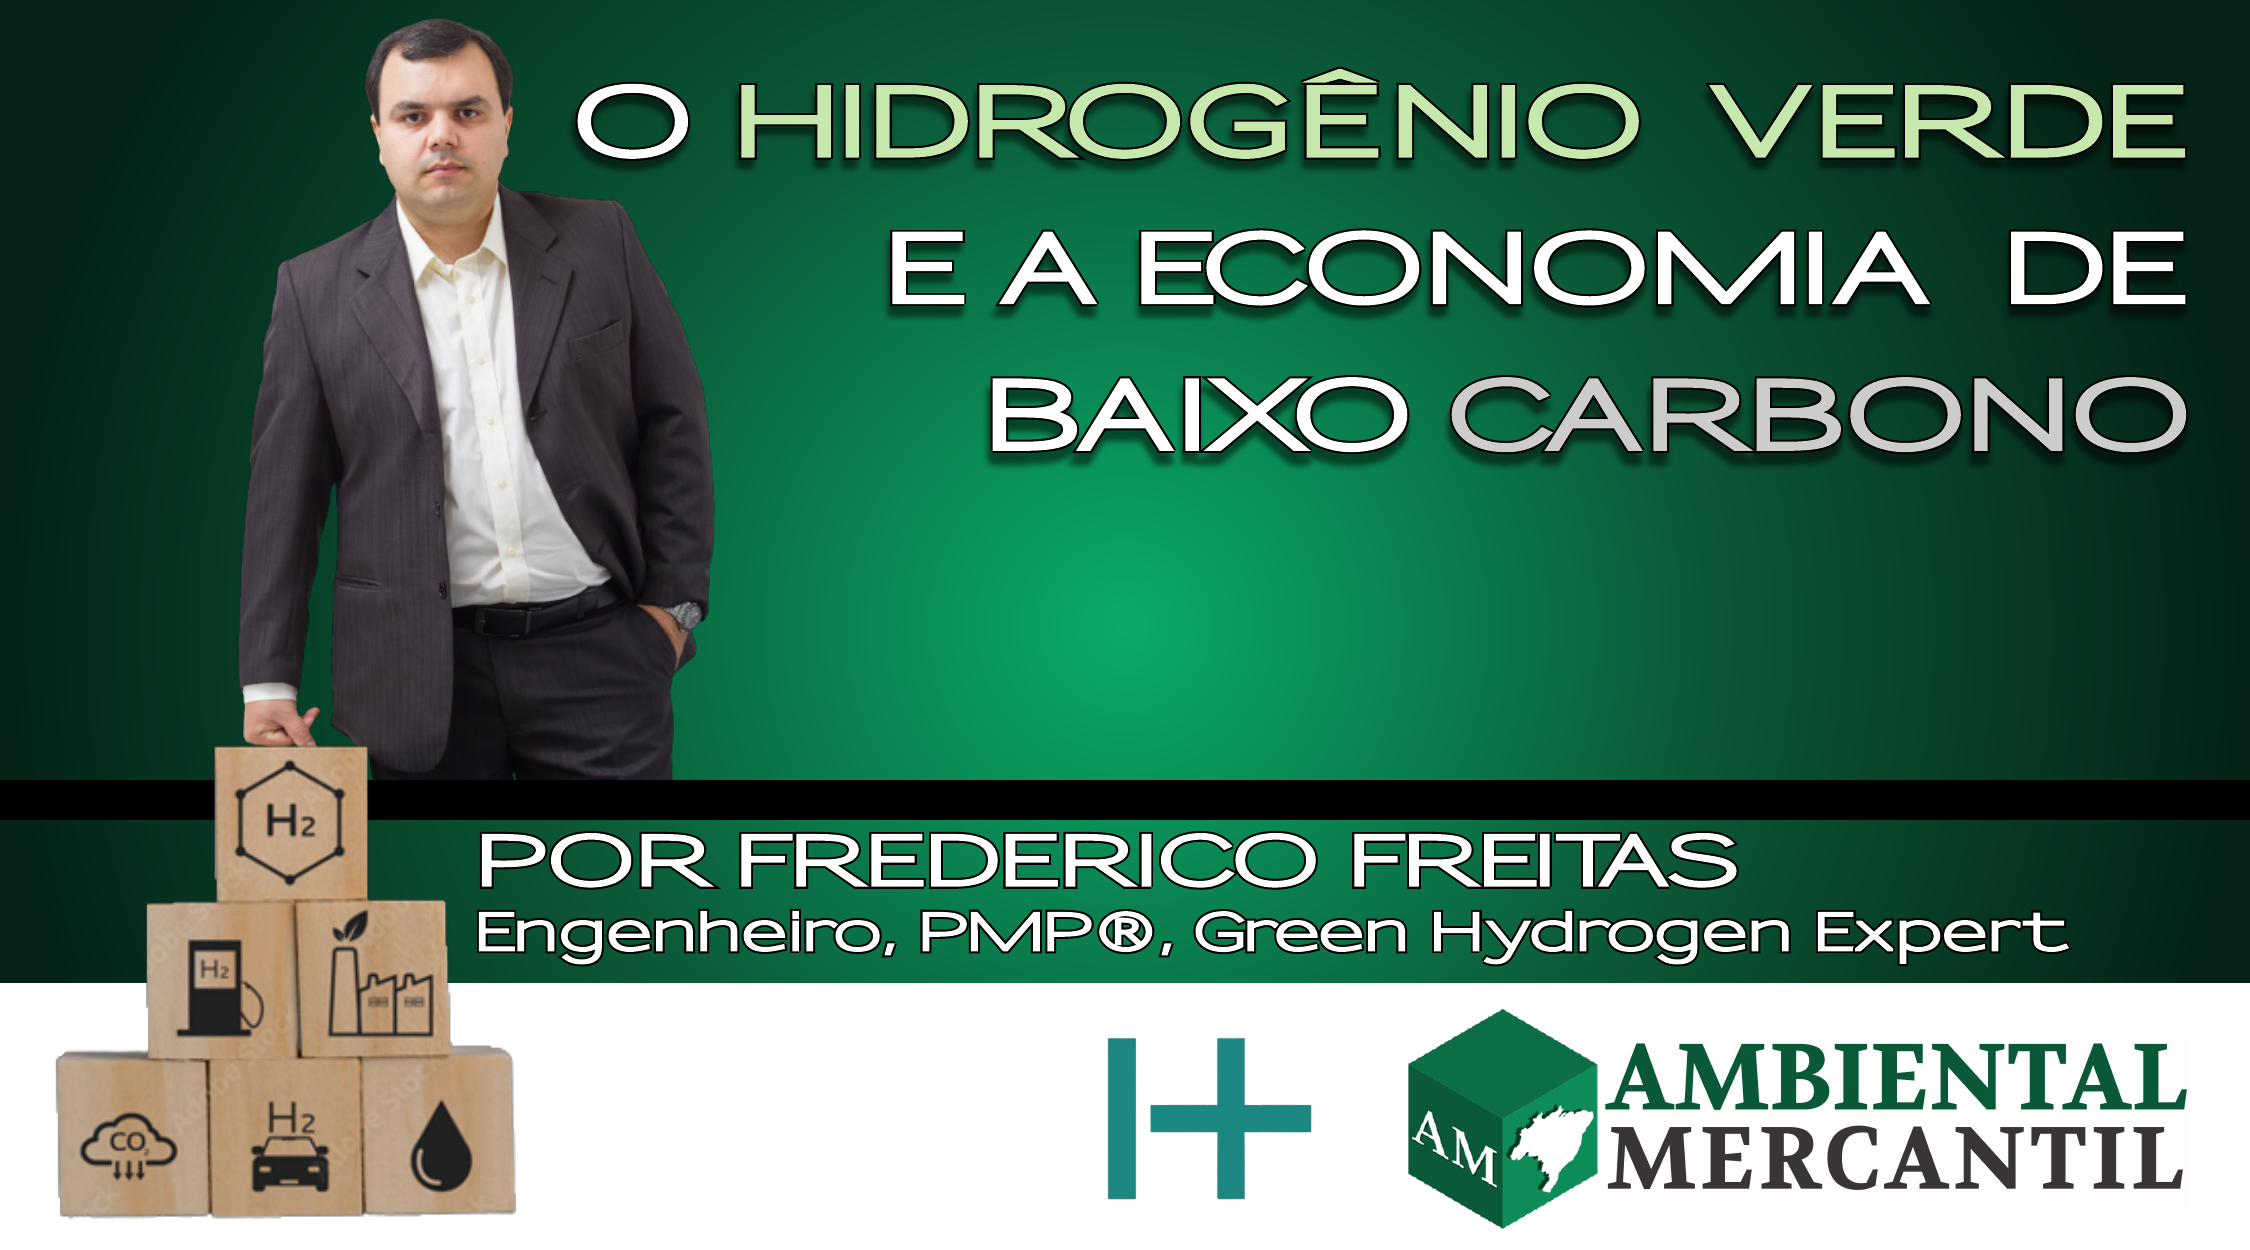 FREDERICO-FREITAS-COLUNISTA-HIDROGENIO-VERDE-BAIXO-CARBONO-AMBIENTAL-MERCANTILv4-540×300-5